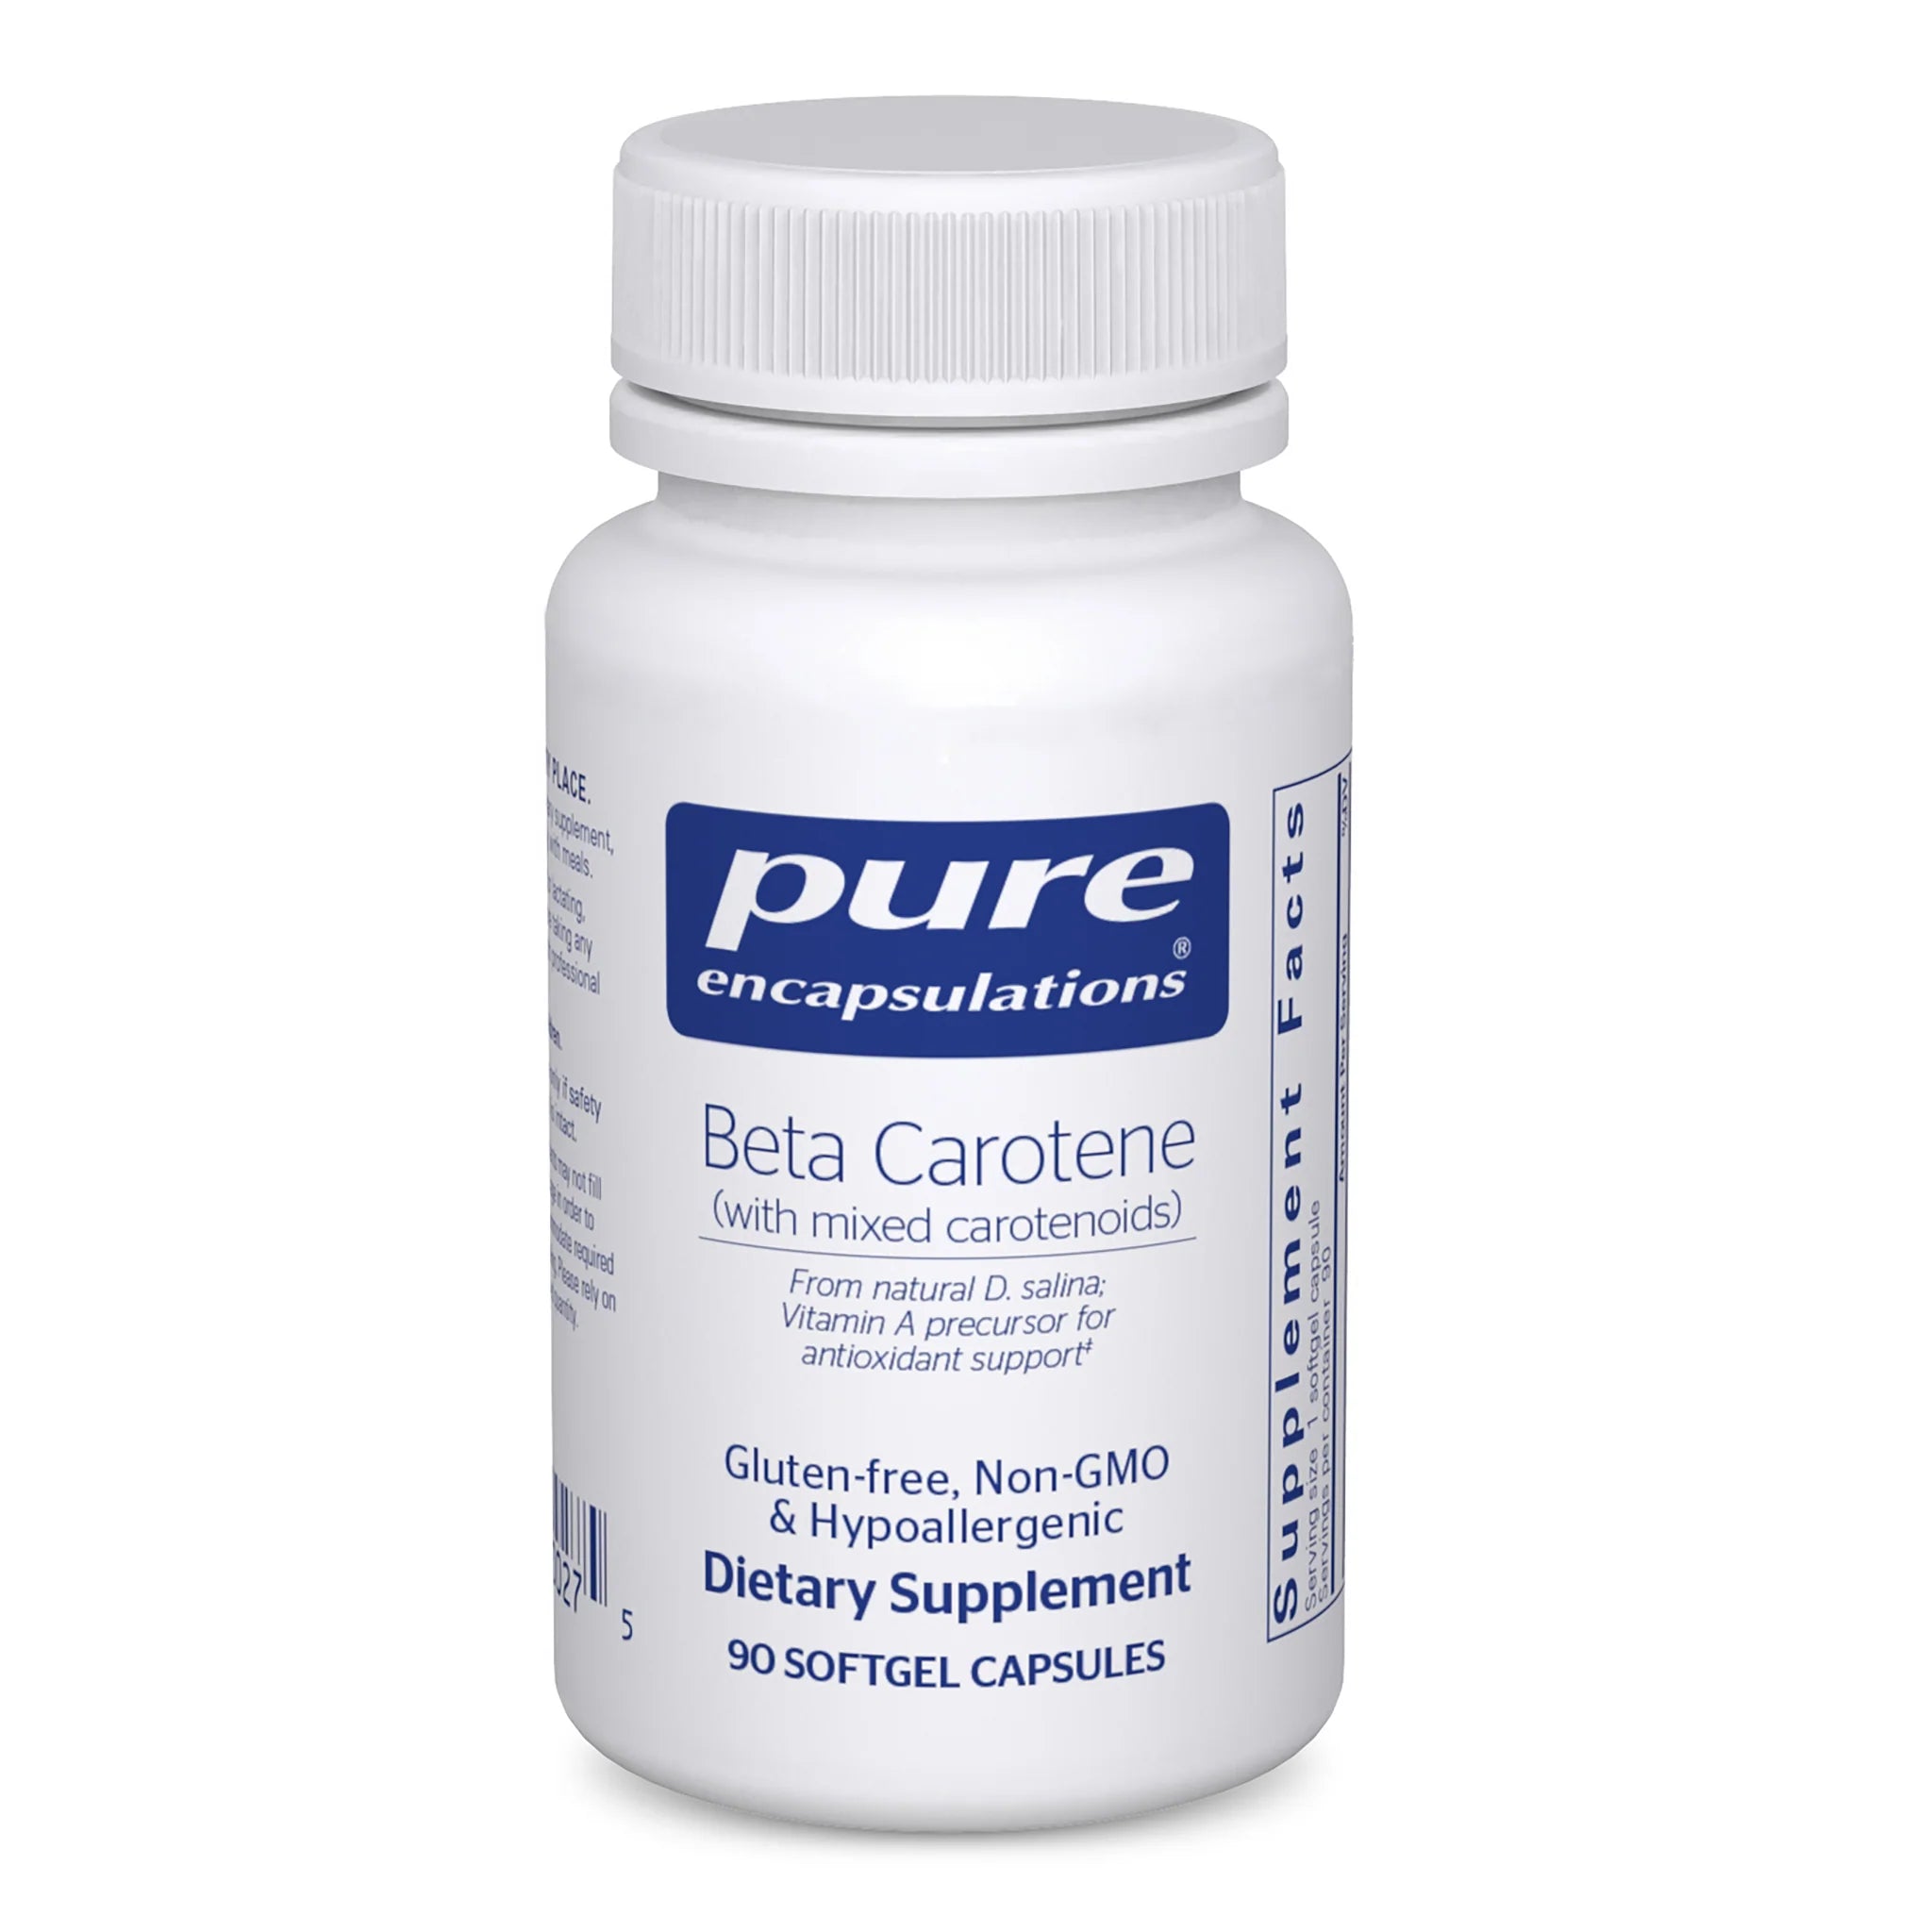 Beta Carotene (with mixed carotenoids)